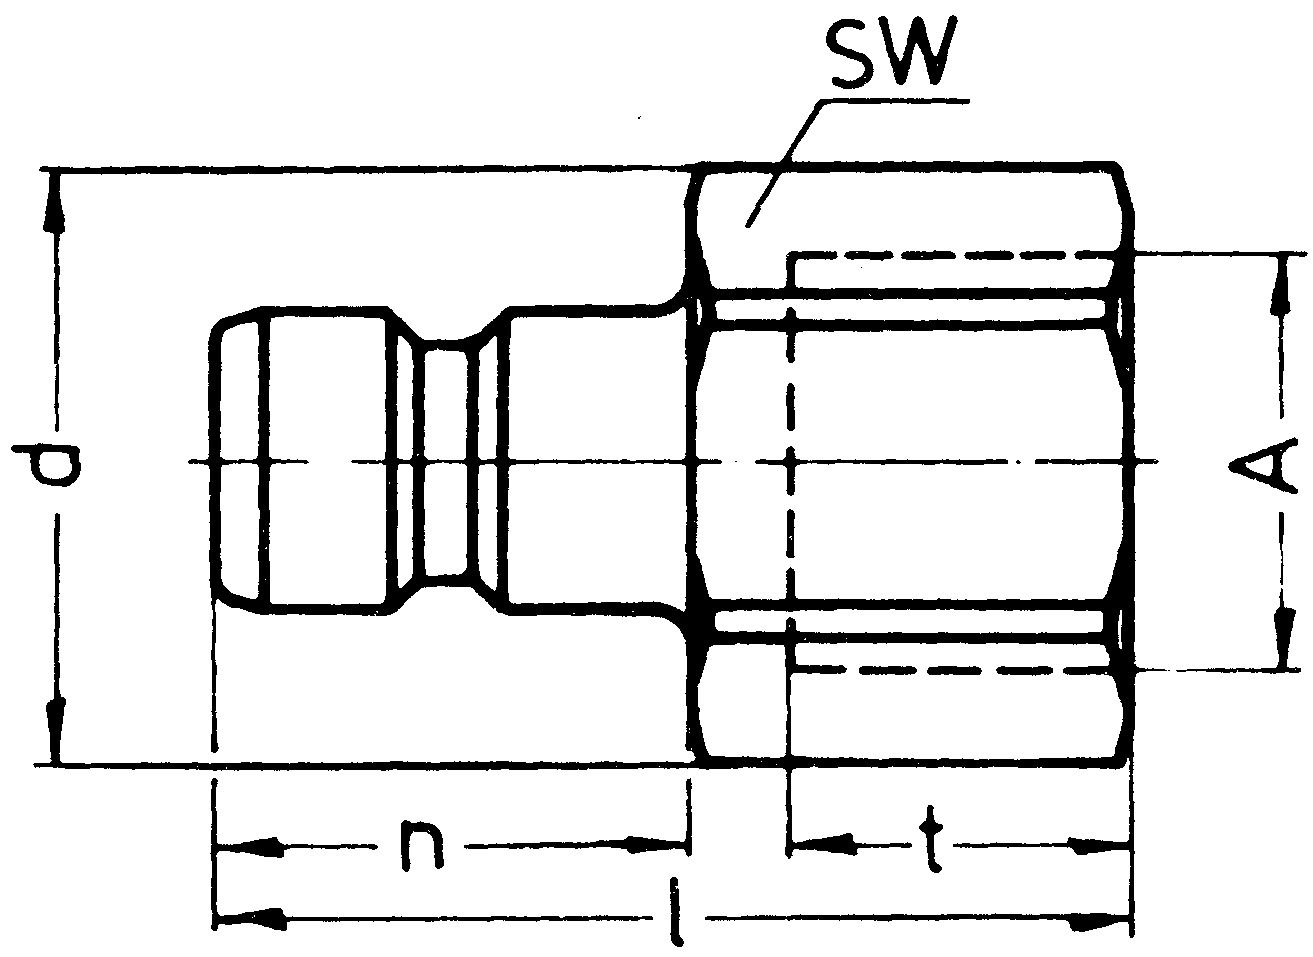 SP-009-1-WR521-21AD-EB